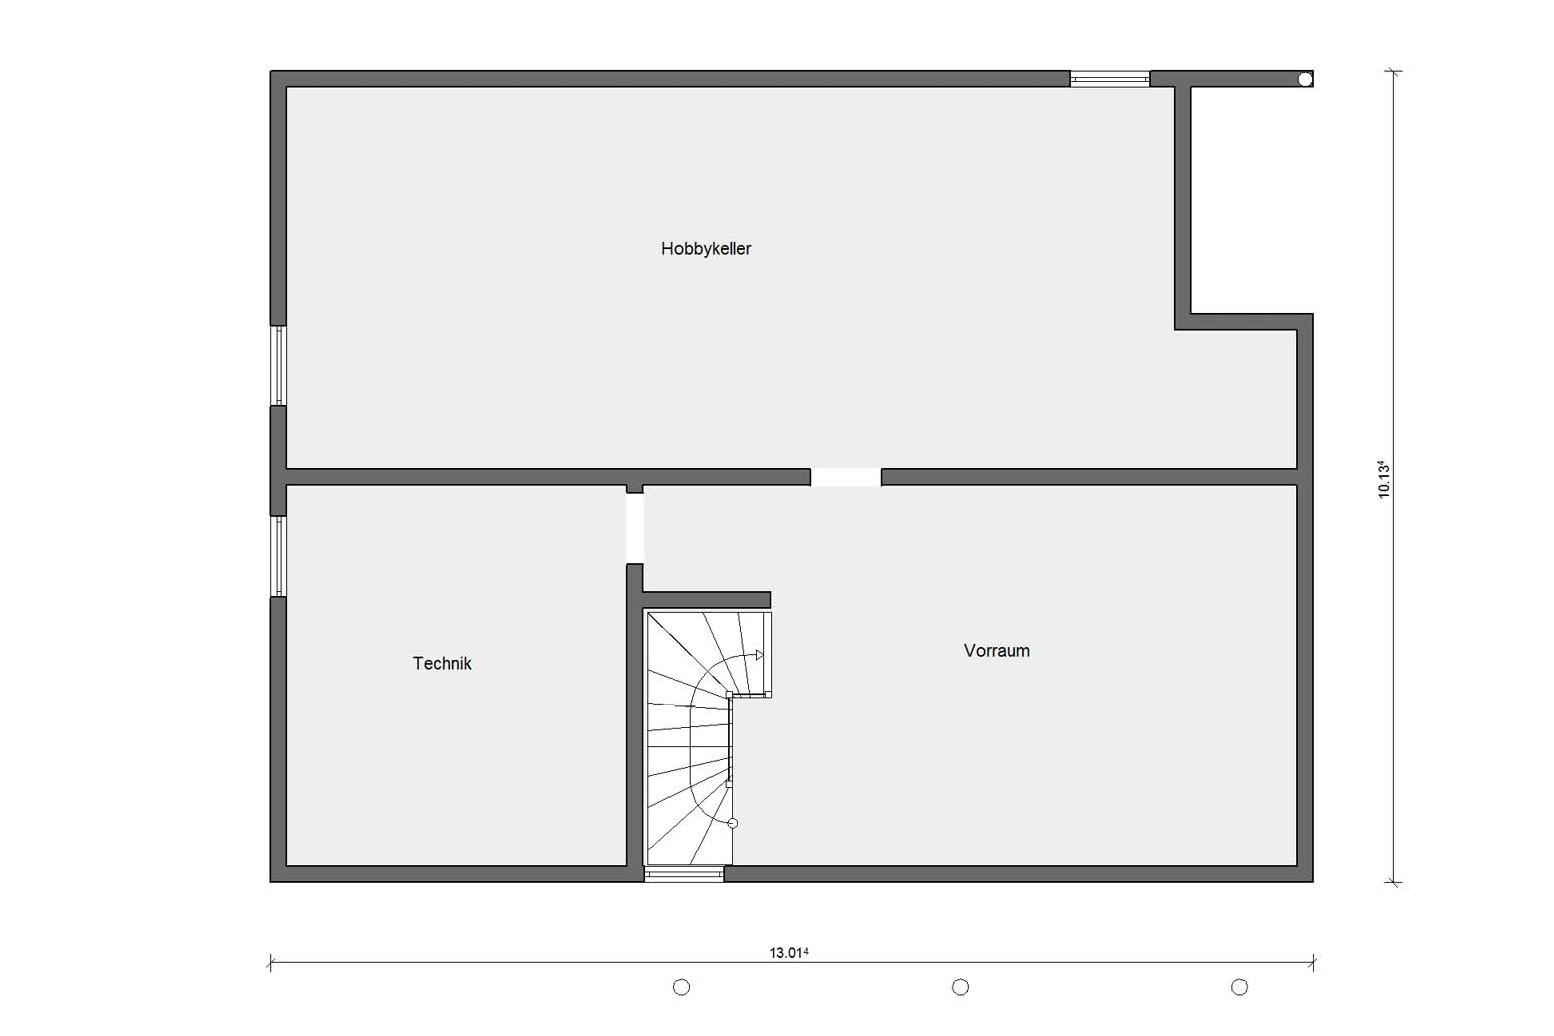 Floor plan basement floor M 15-226.1 House with granny flat